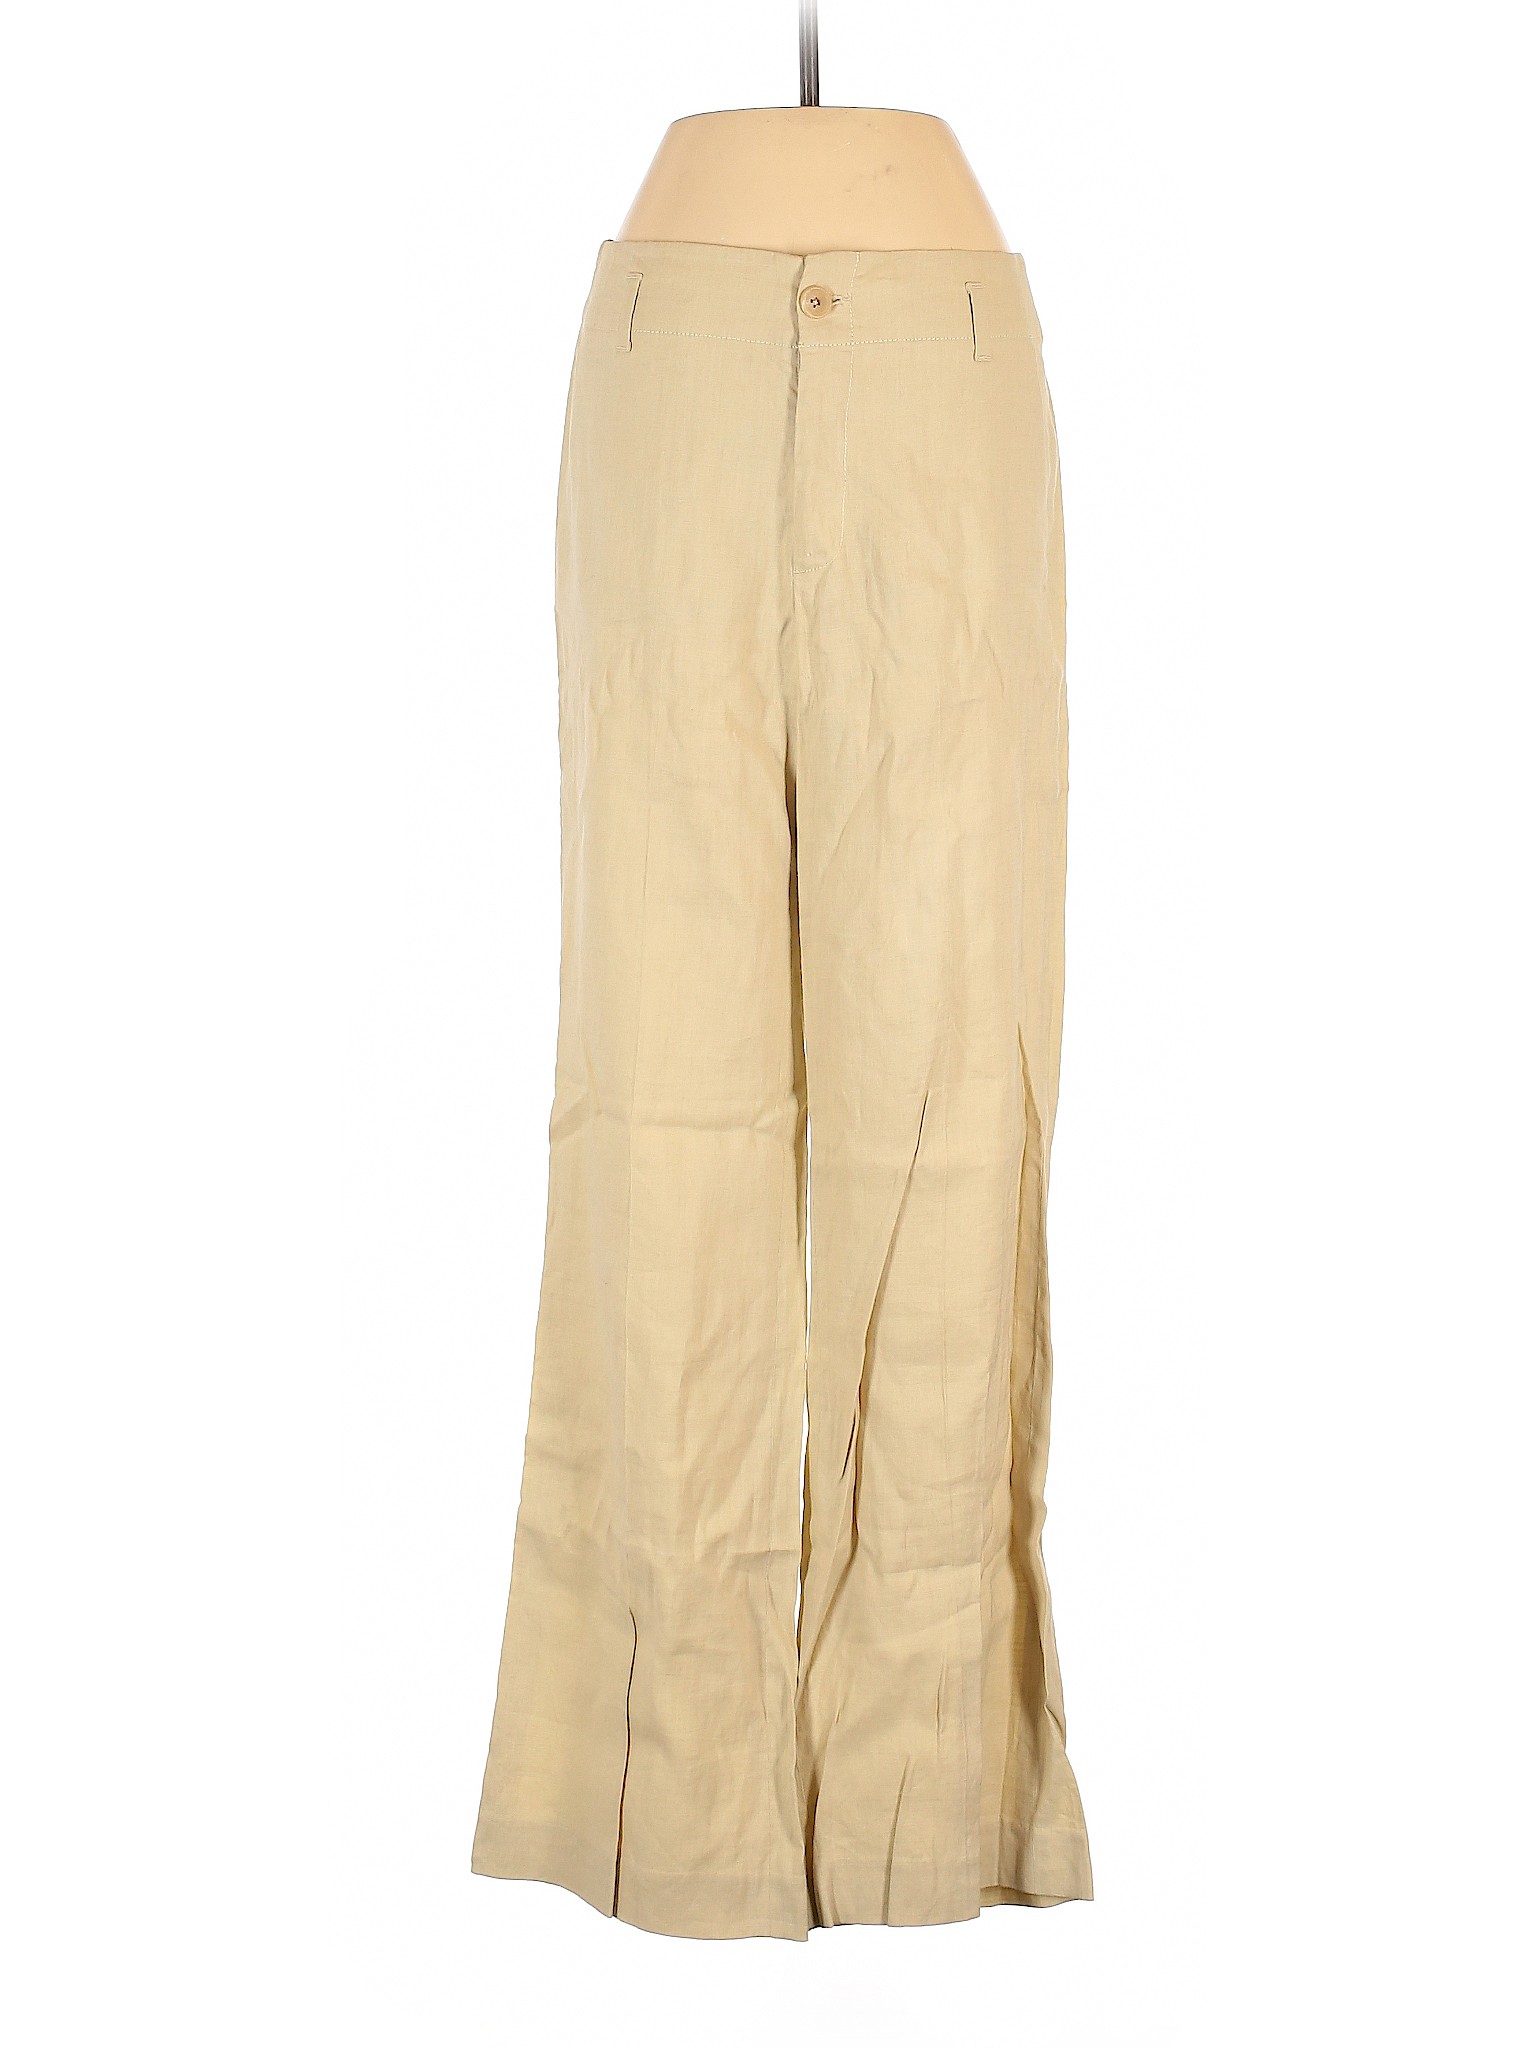 Banana Republic Women Brown Linen Pants 4 | eBay